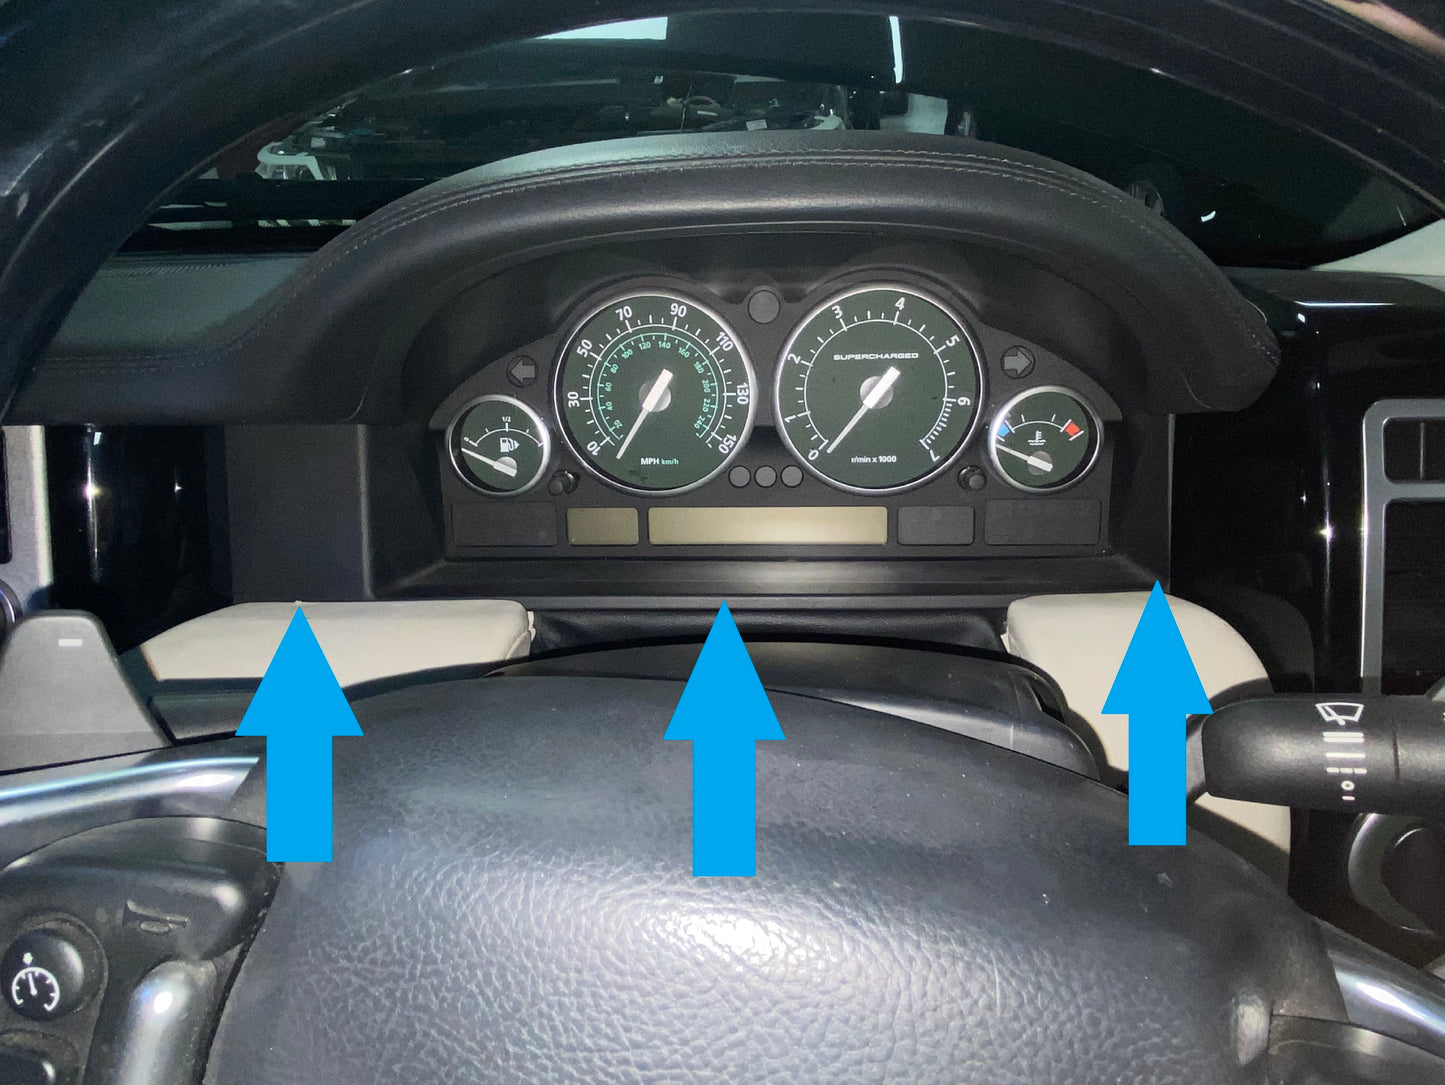 Instrument Speedo Lower Surround Panel for Range Rover L322 - LHD